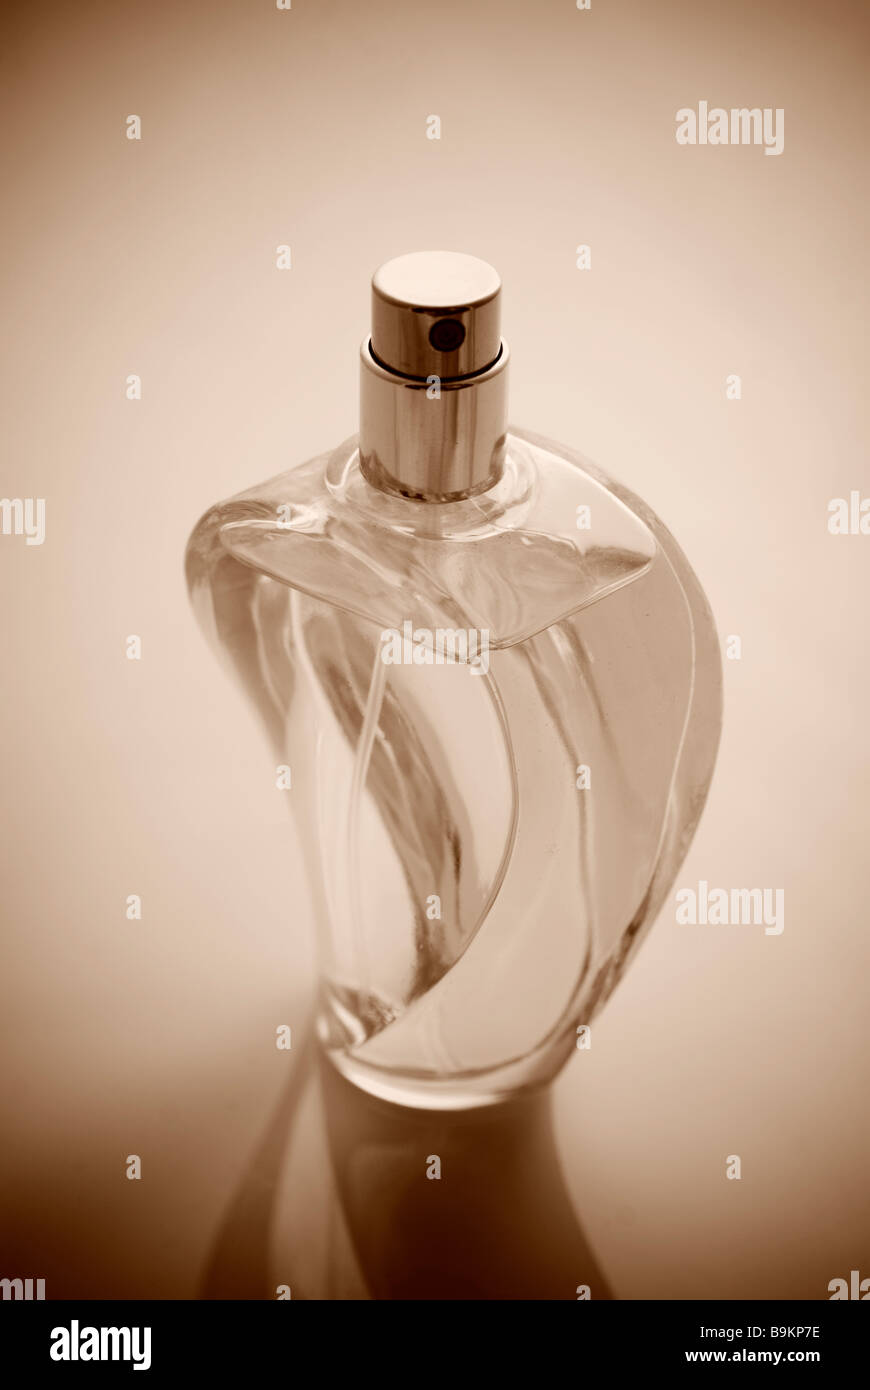 I toni seppia bottiglia di profumo Foto stock - Alamy